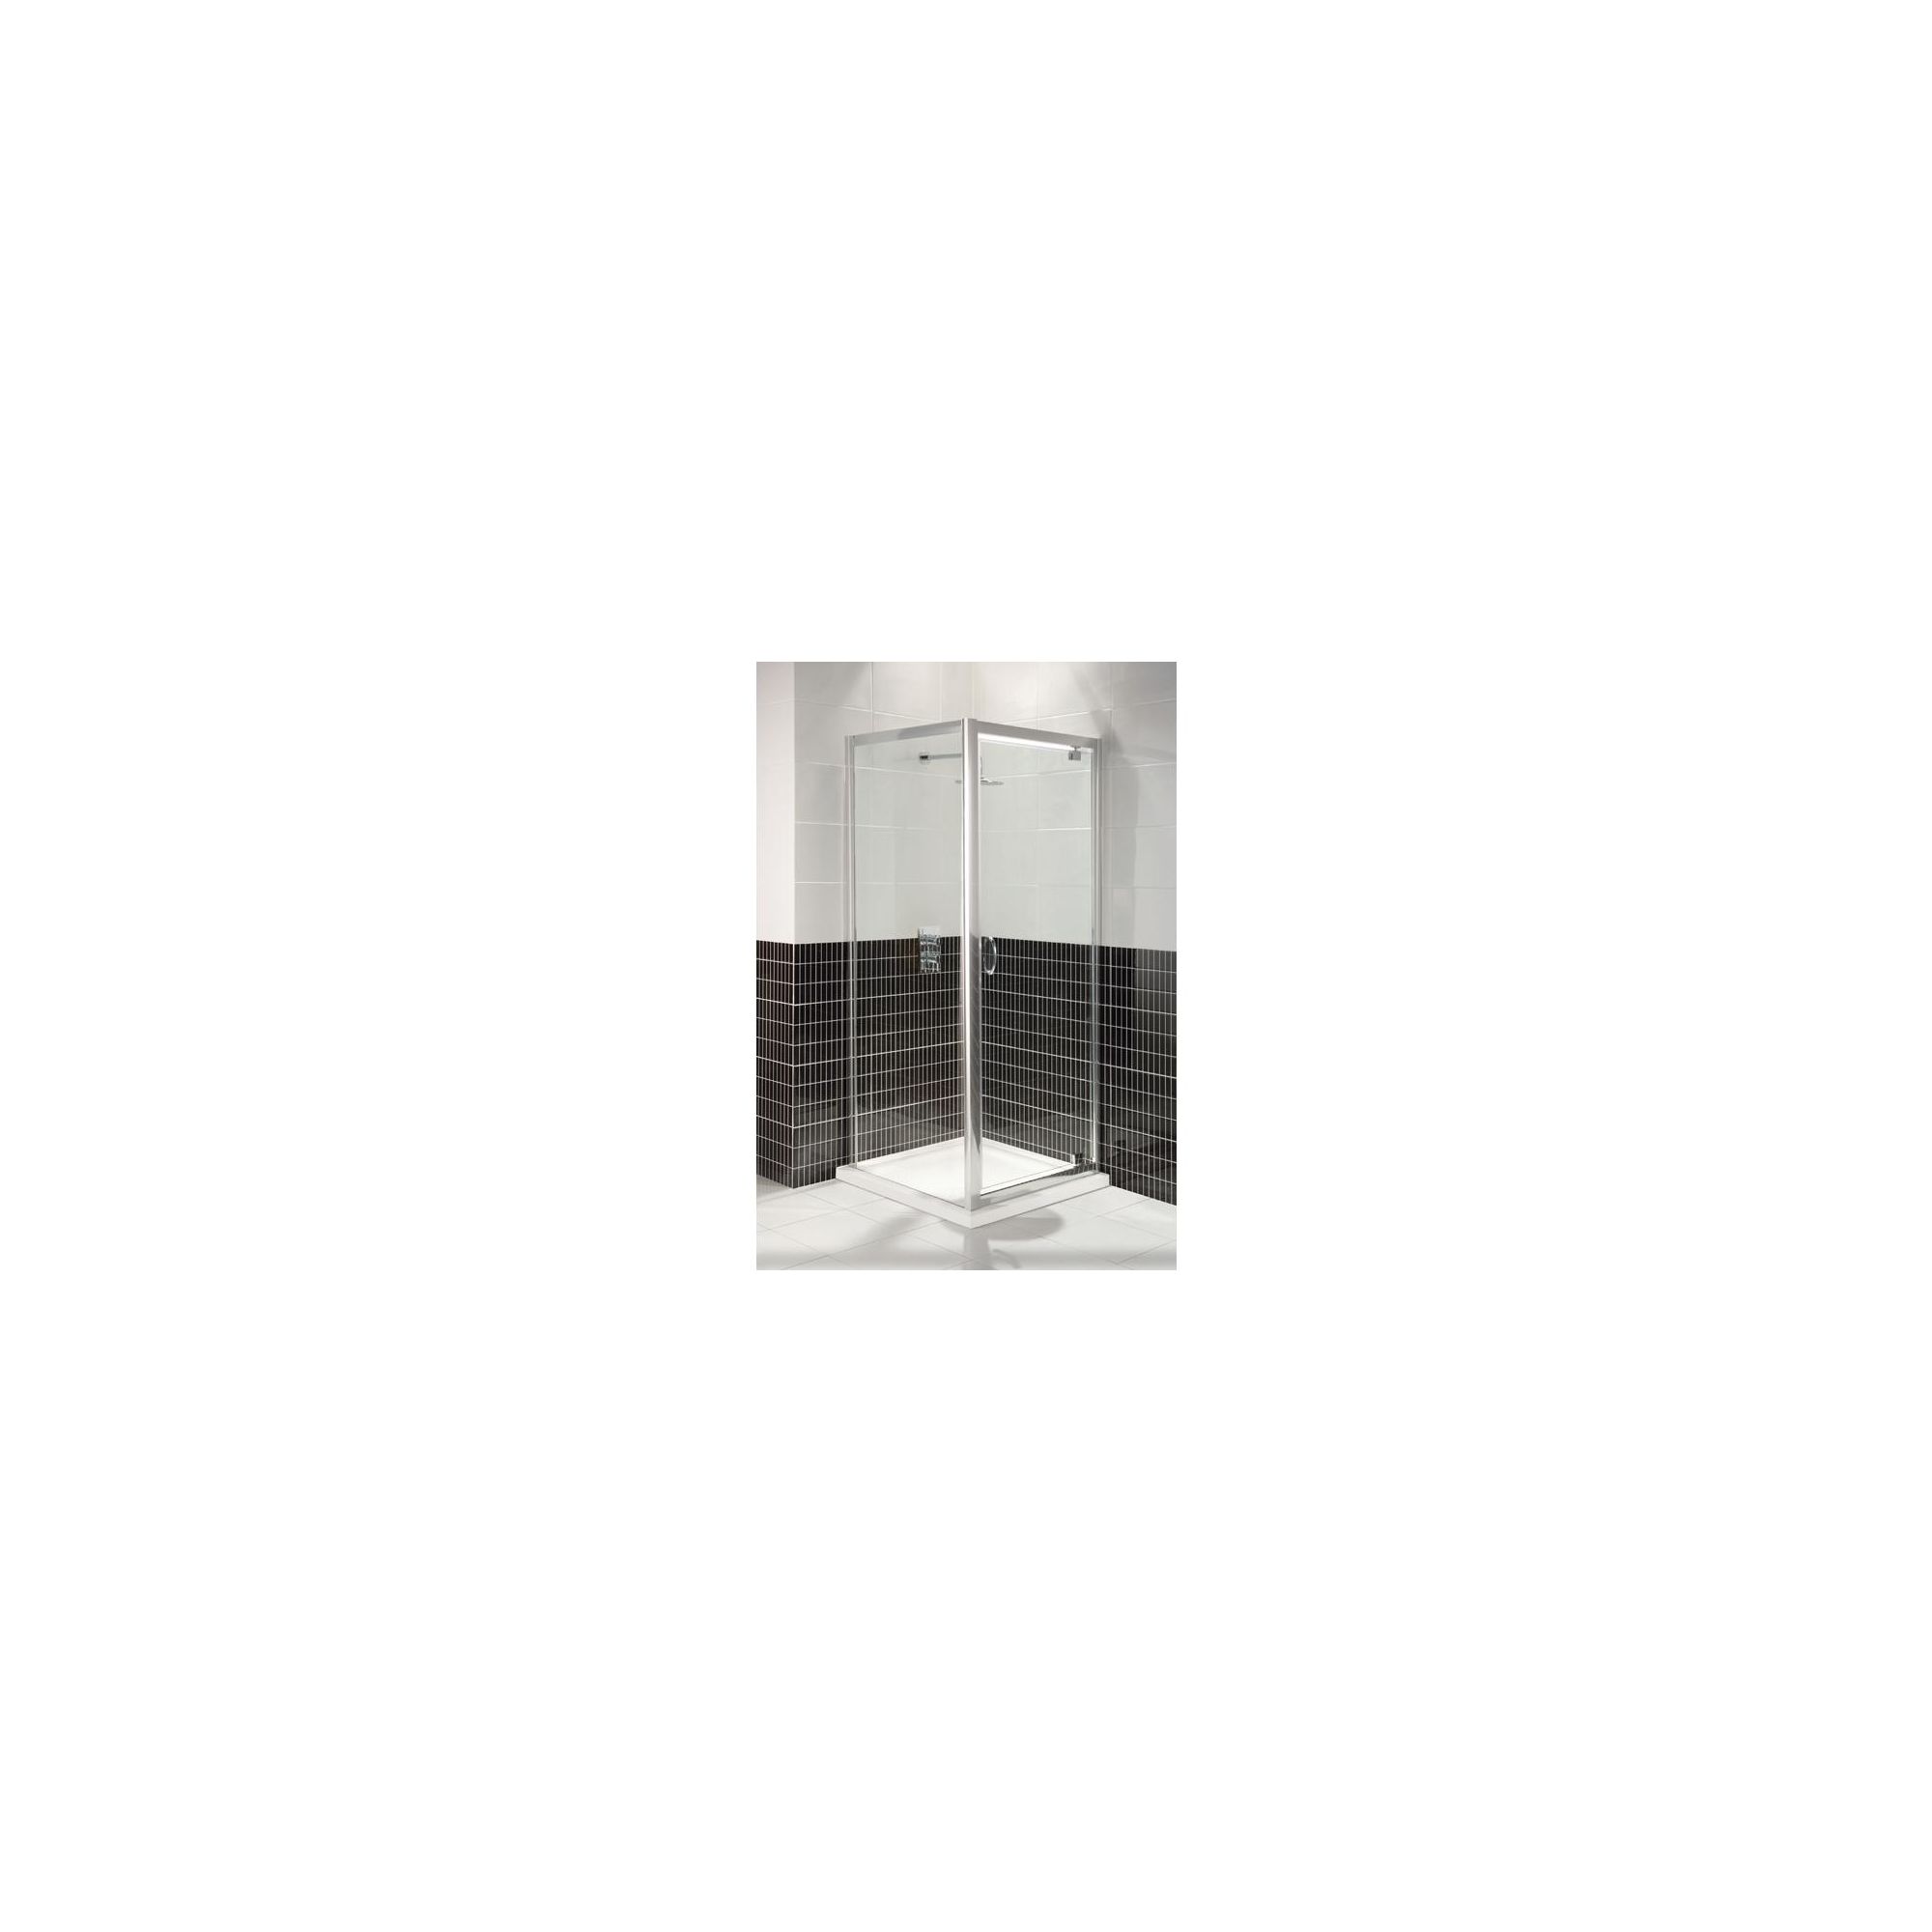 Balterley Framed Pivot Shower Enclosure, 800mm x 800mm, Standard Tray, 6mm Glass at Tesco Direct